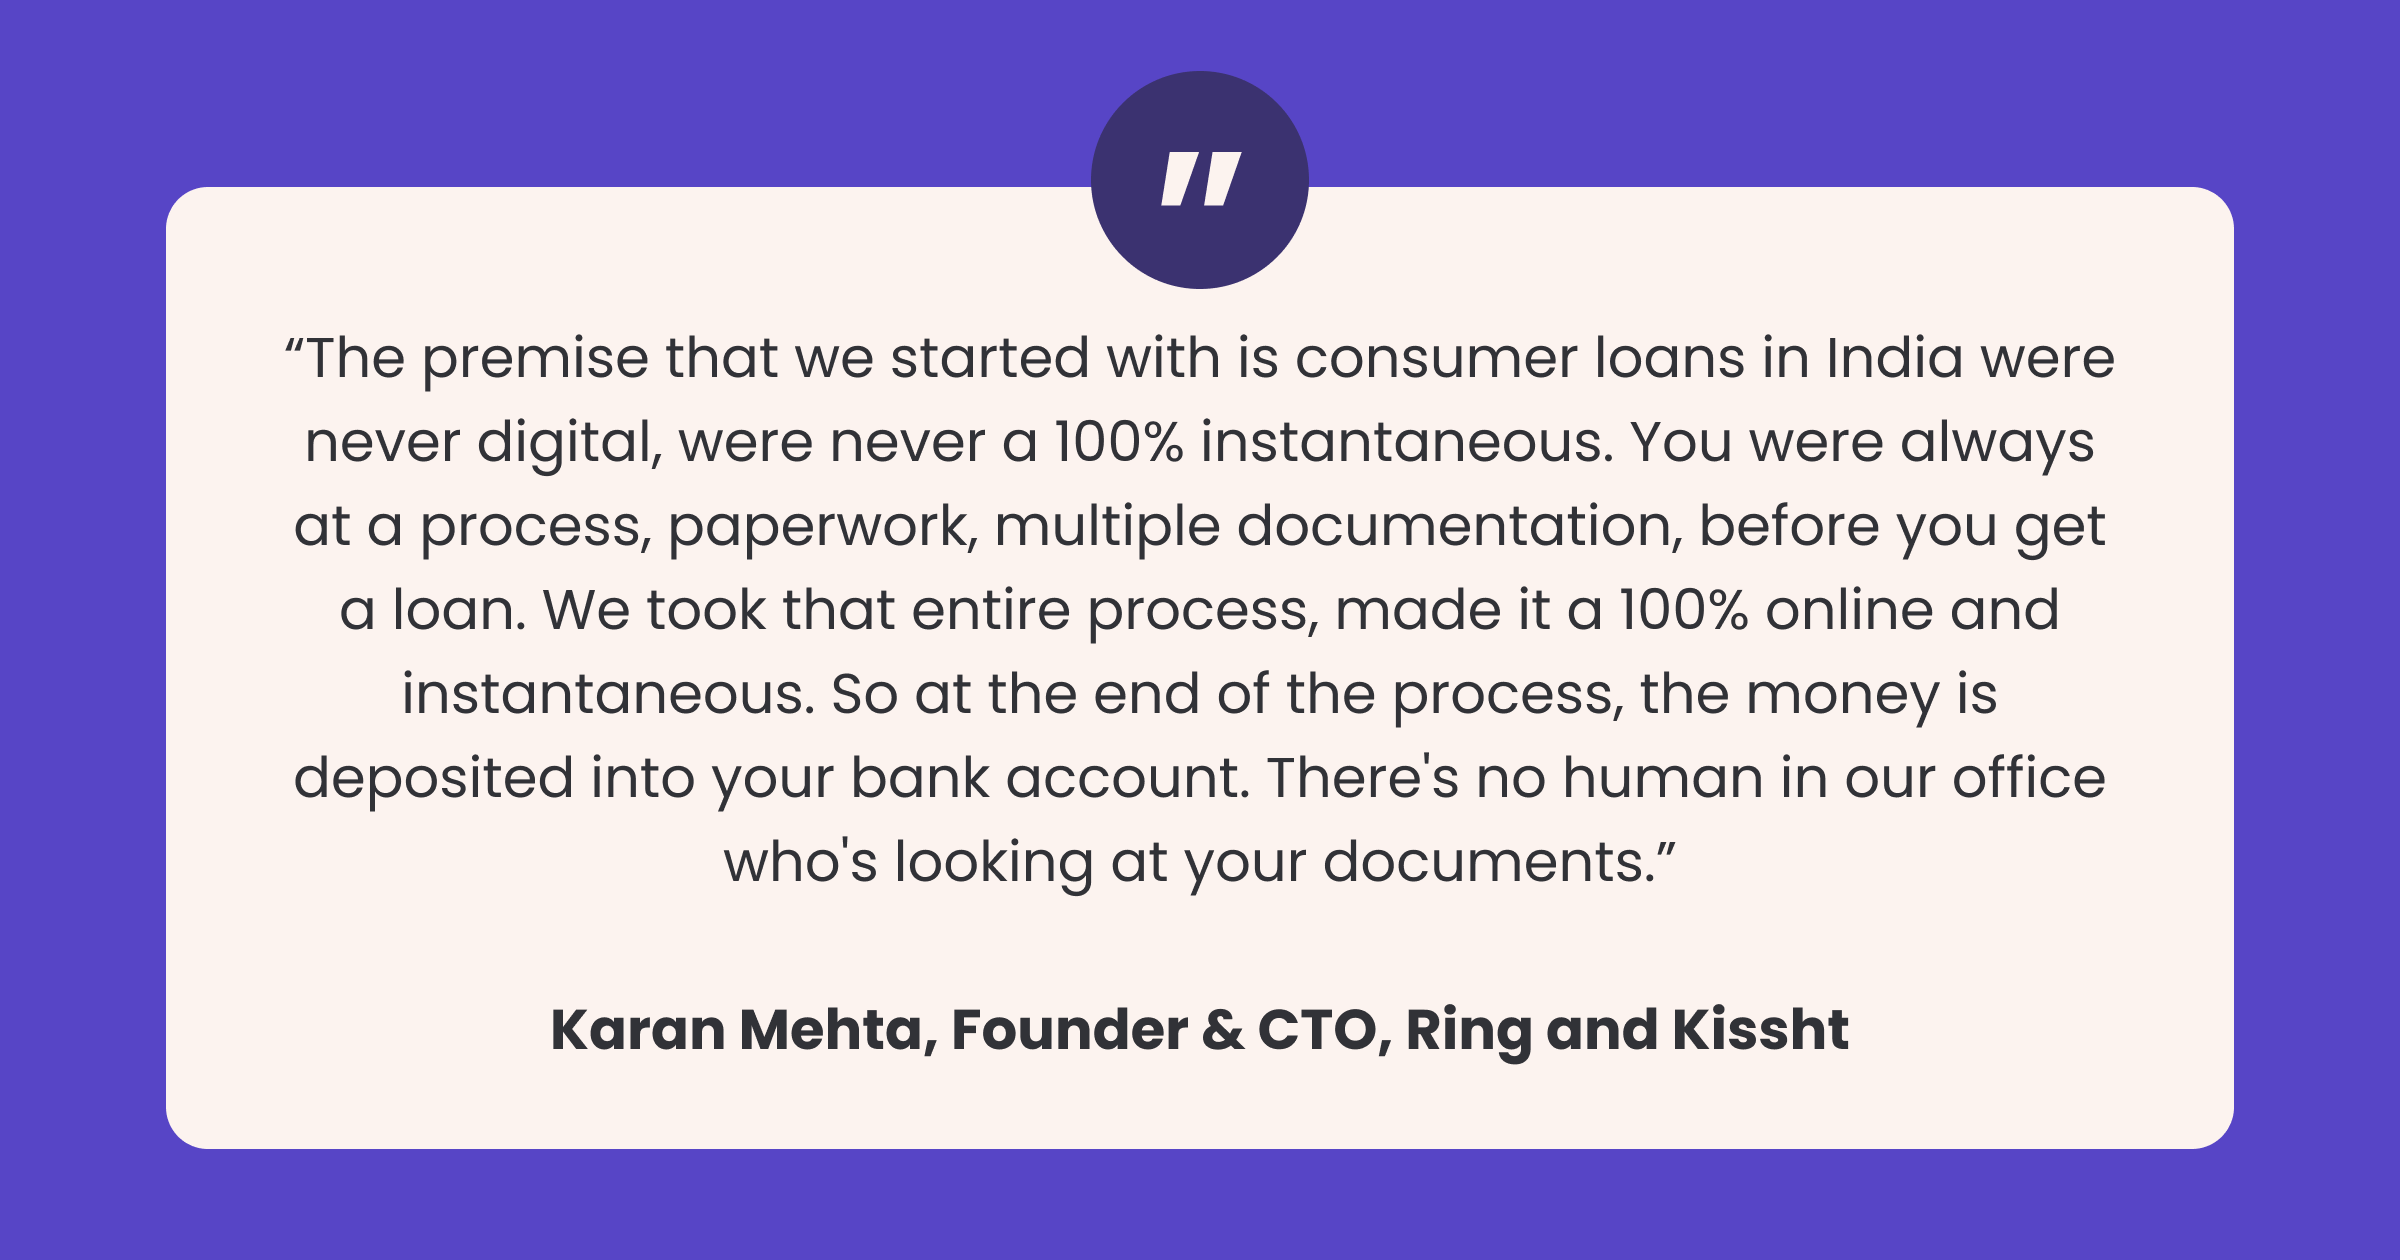 Karan Mehta, Founder & CTO, Kissht and Ring testimonial 2